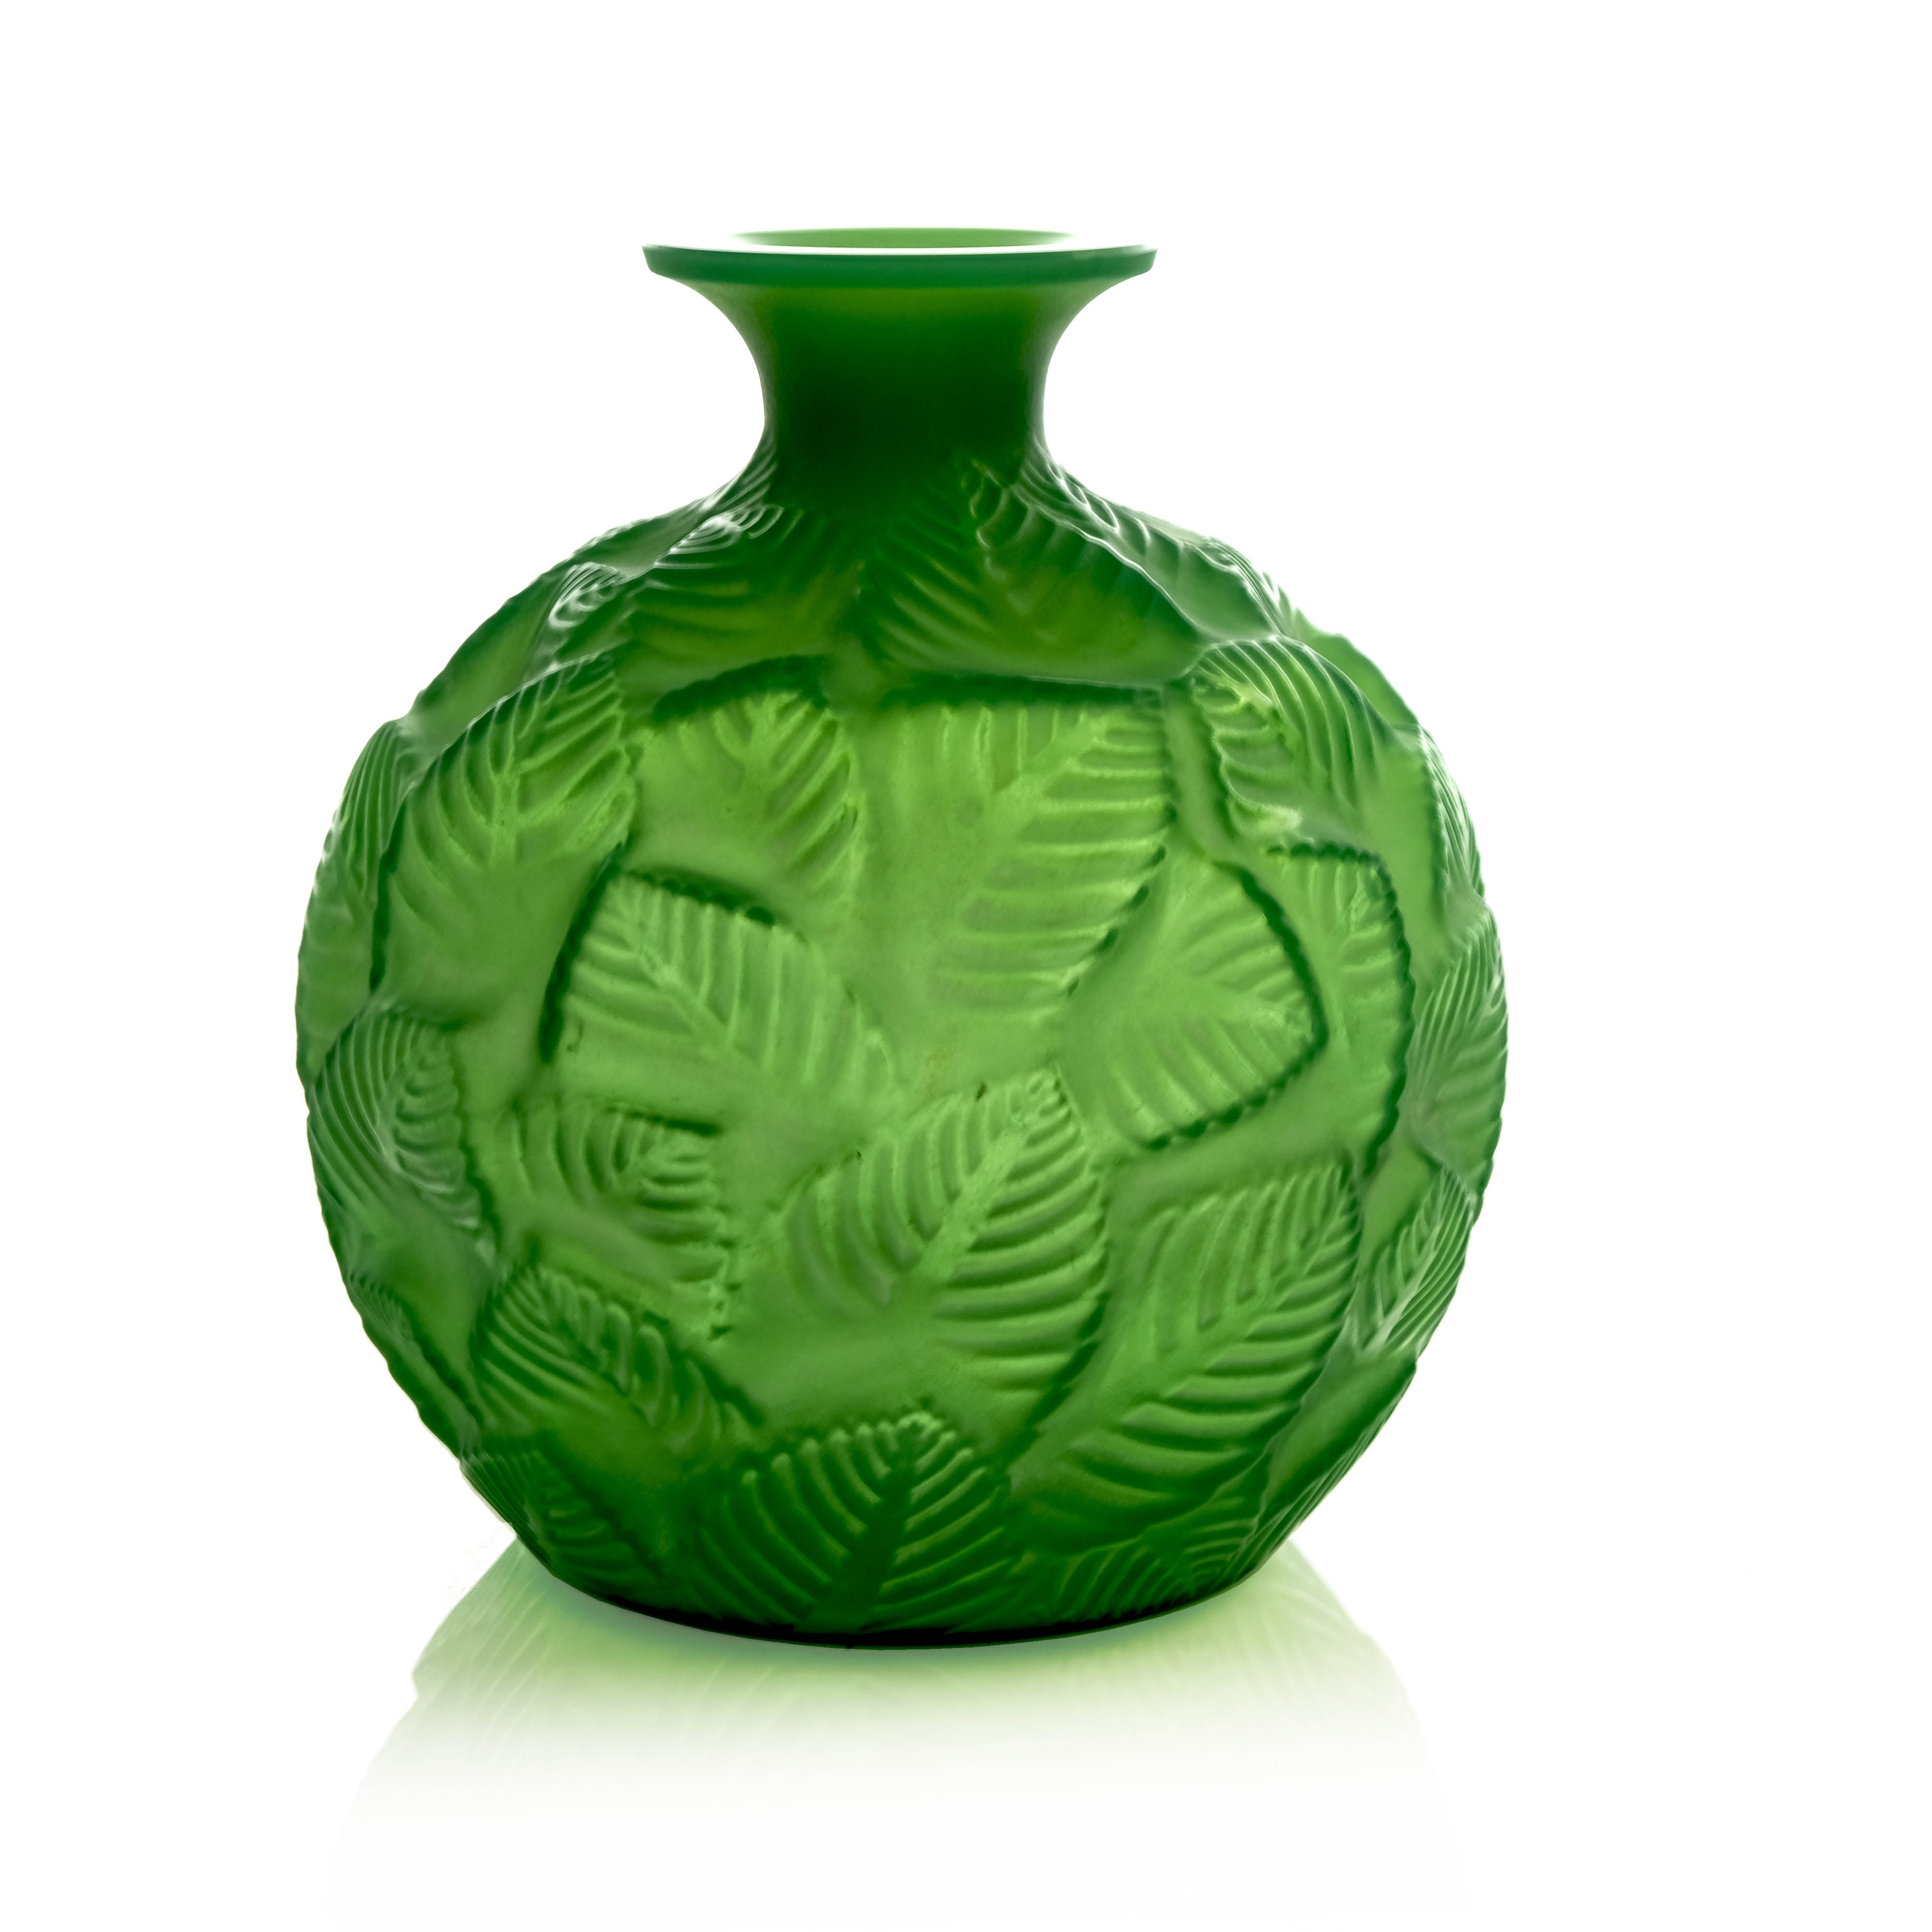 Rene Lalique, Ormeaux green jade vase, model 984